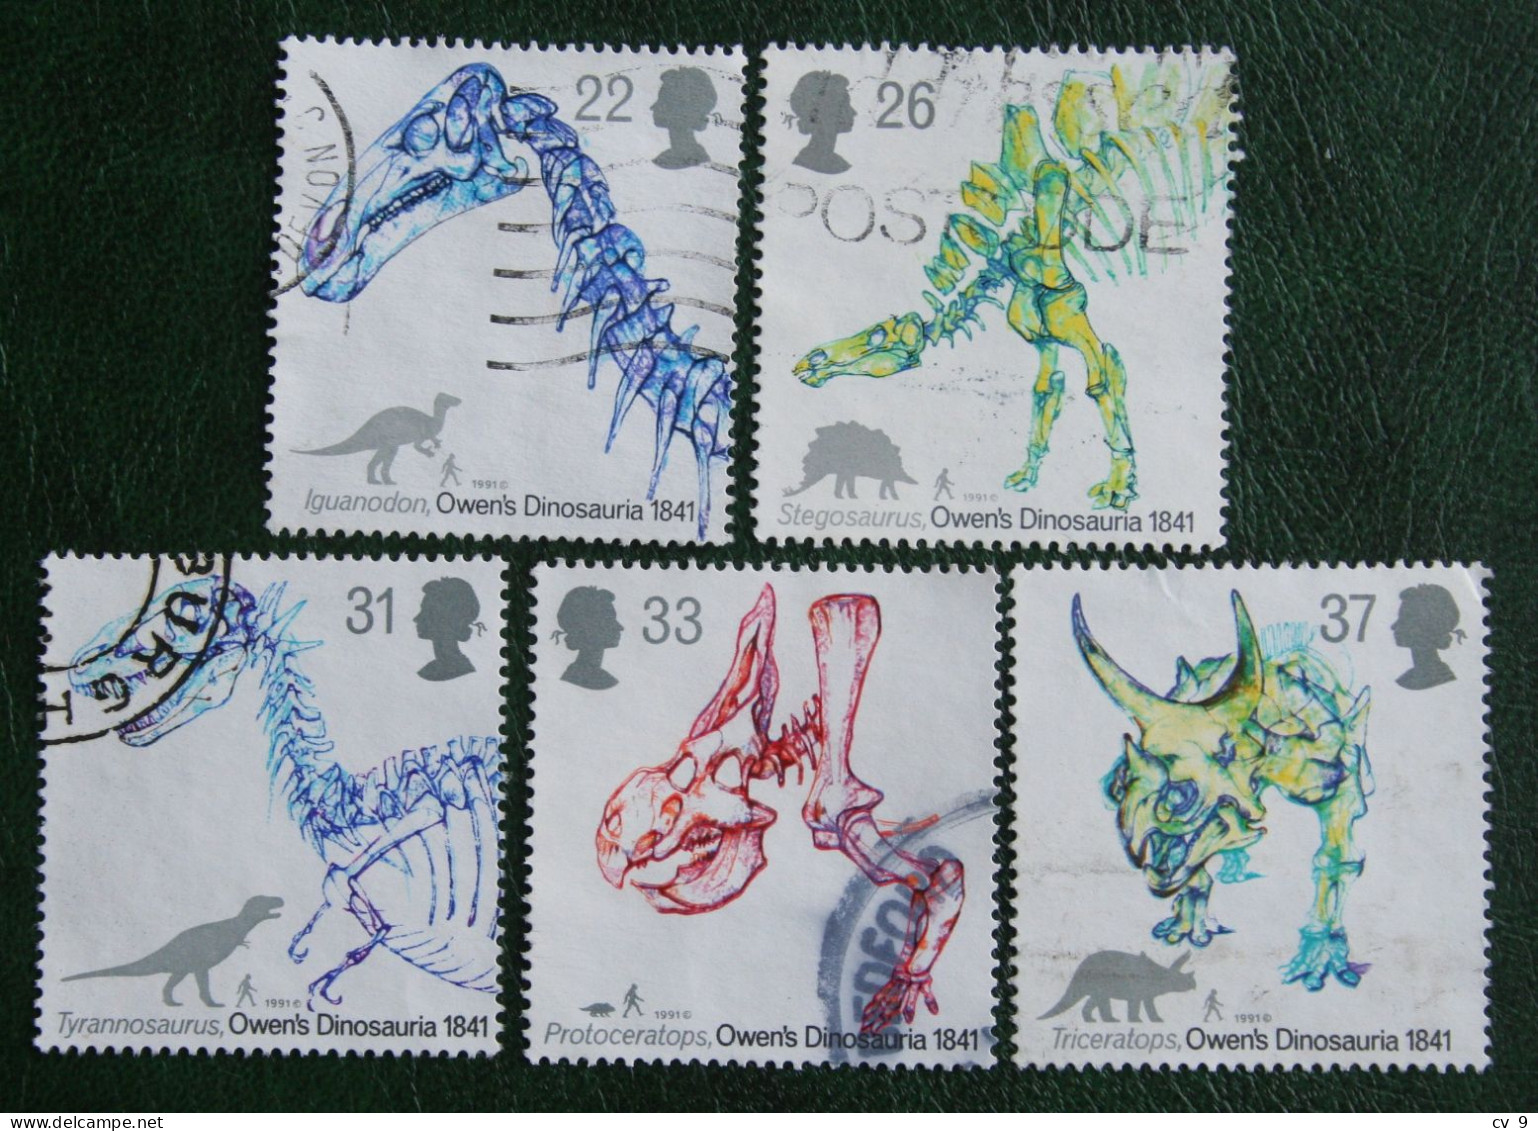 Owen's Dinosauria Dinosaurs Dinosaures Mi 1350-1354 1991 Used Gebruikt Oblitere ENGLAND GRANDE-BRETAGNE GB GREAT BRITAIN - Used Stamps